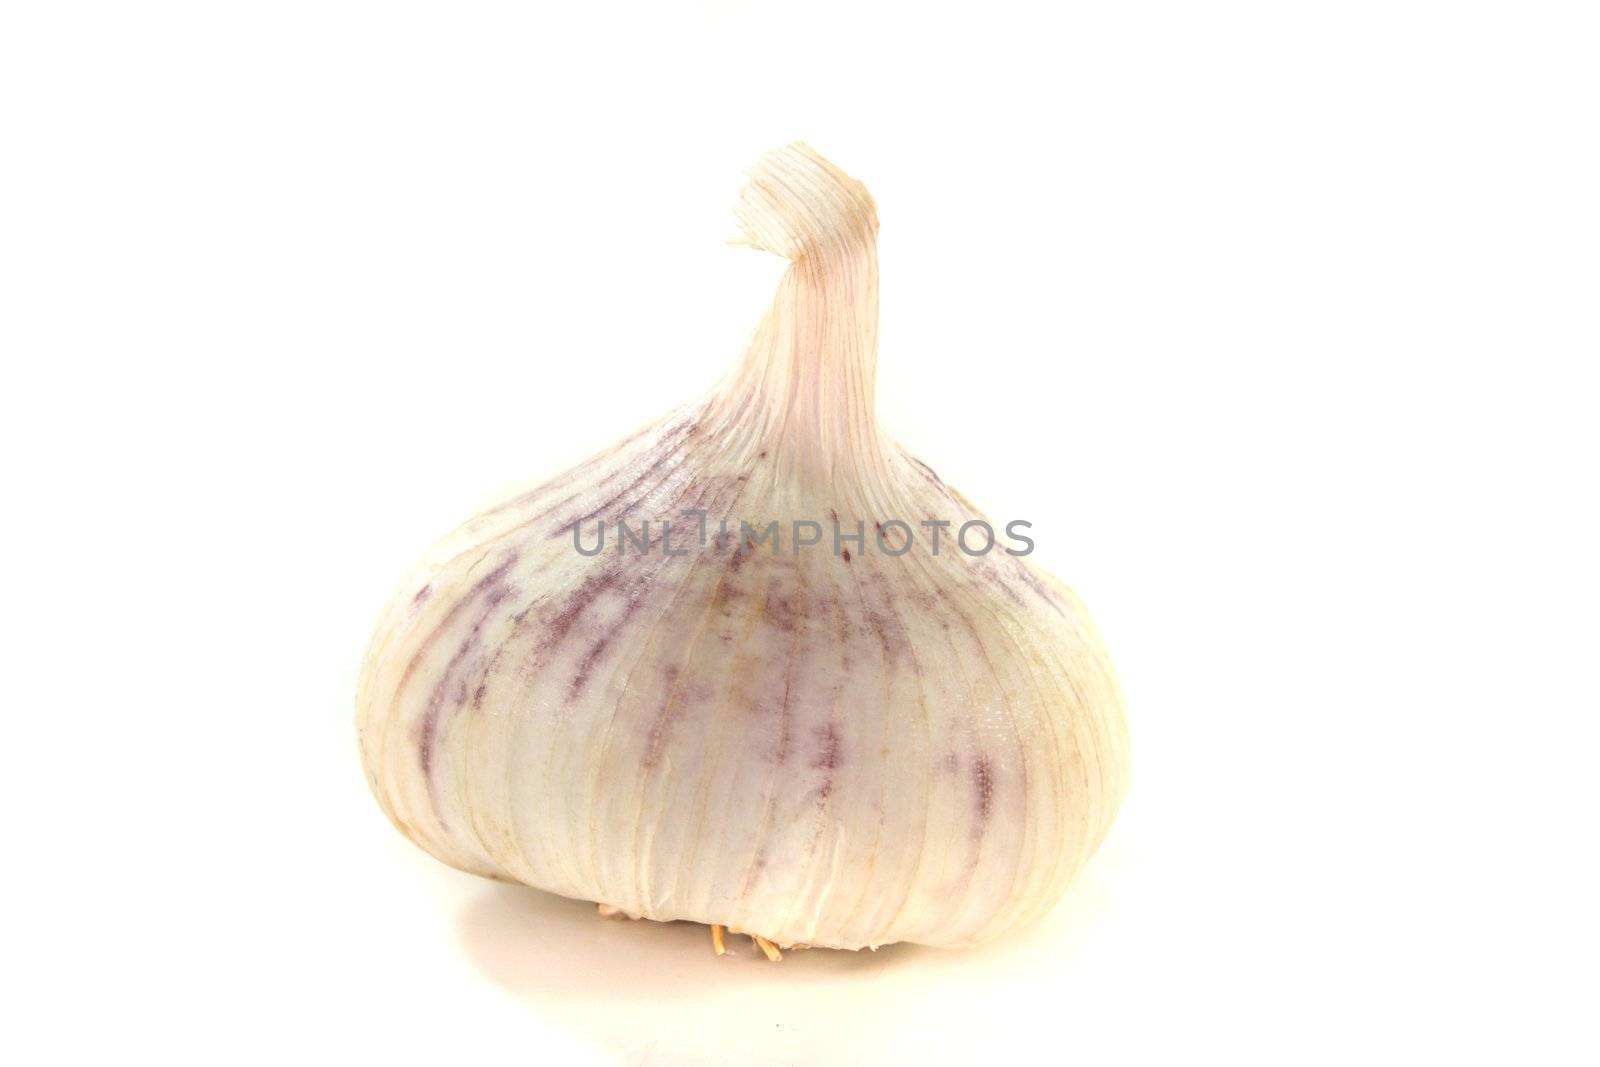 a garlic bulb on a white background